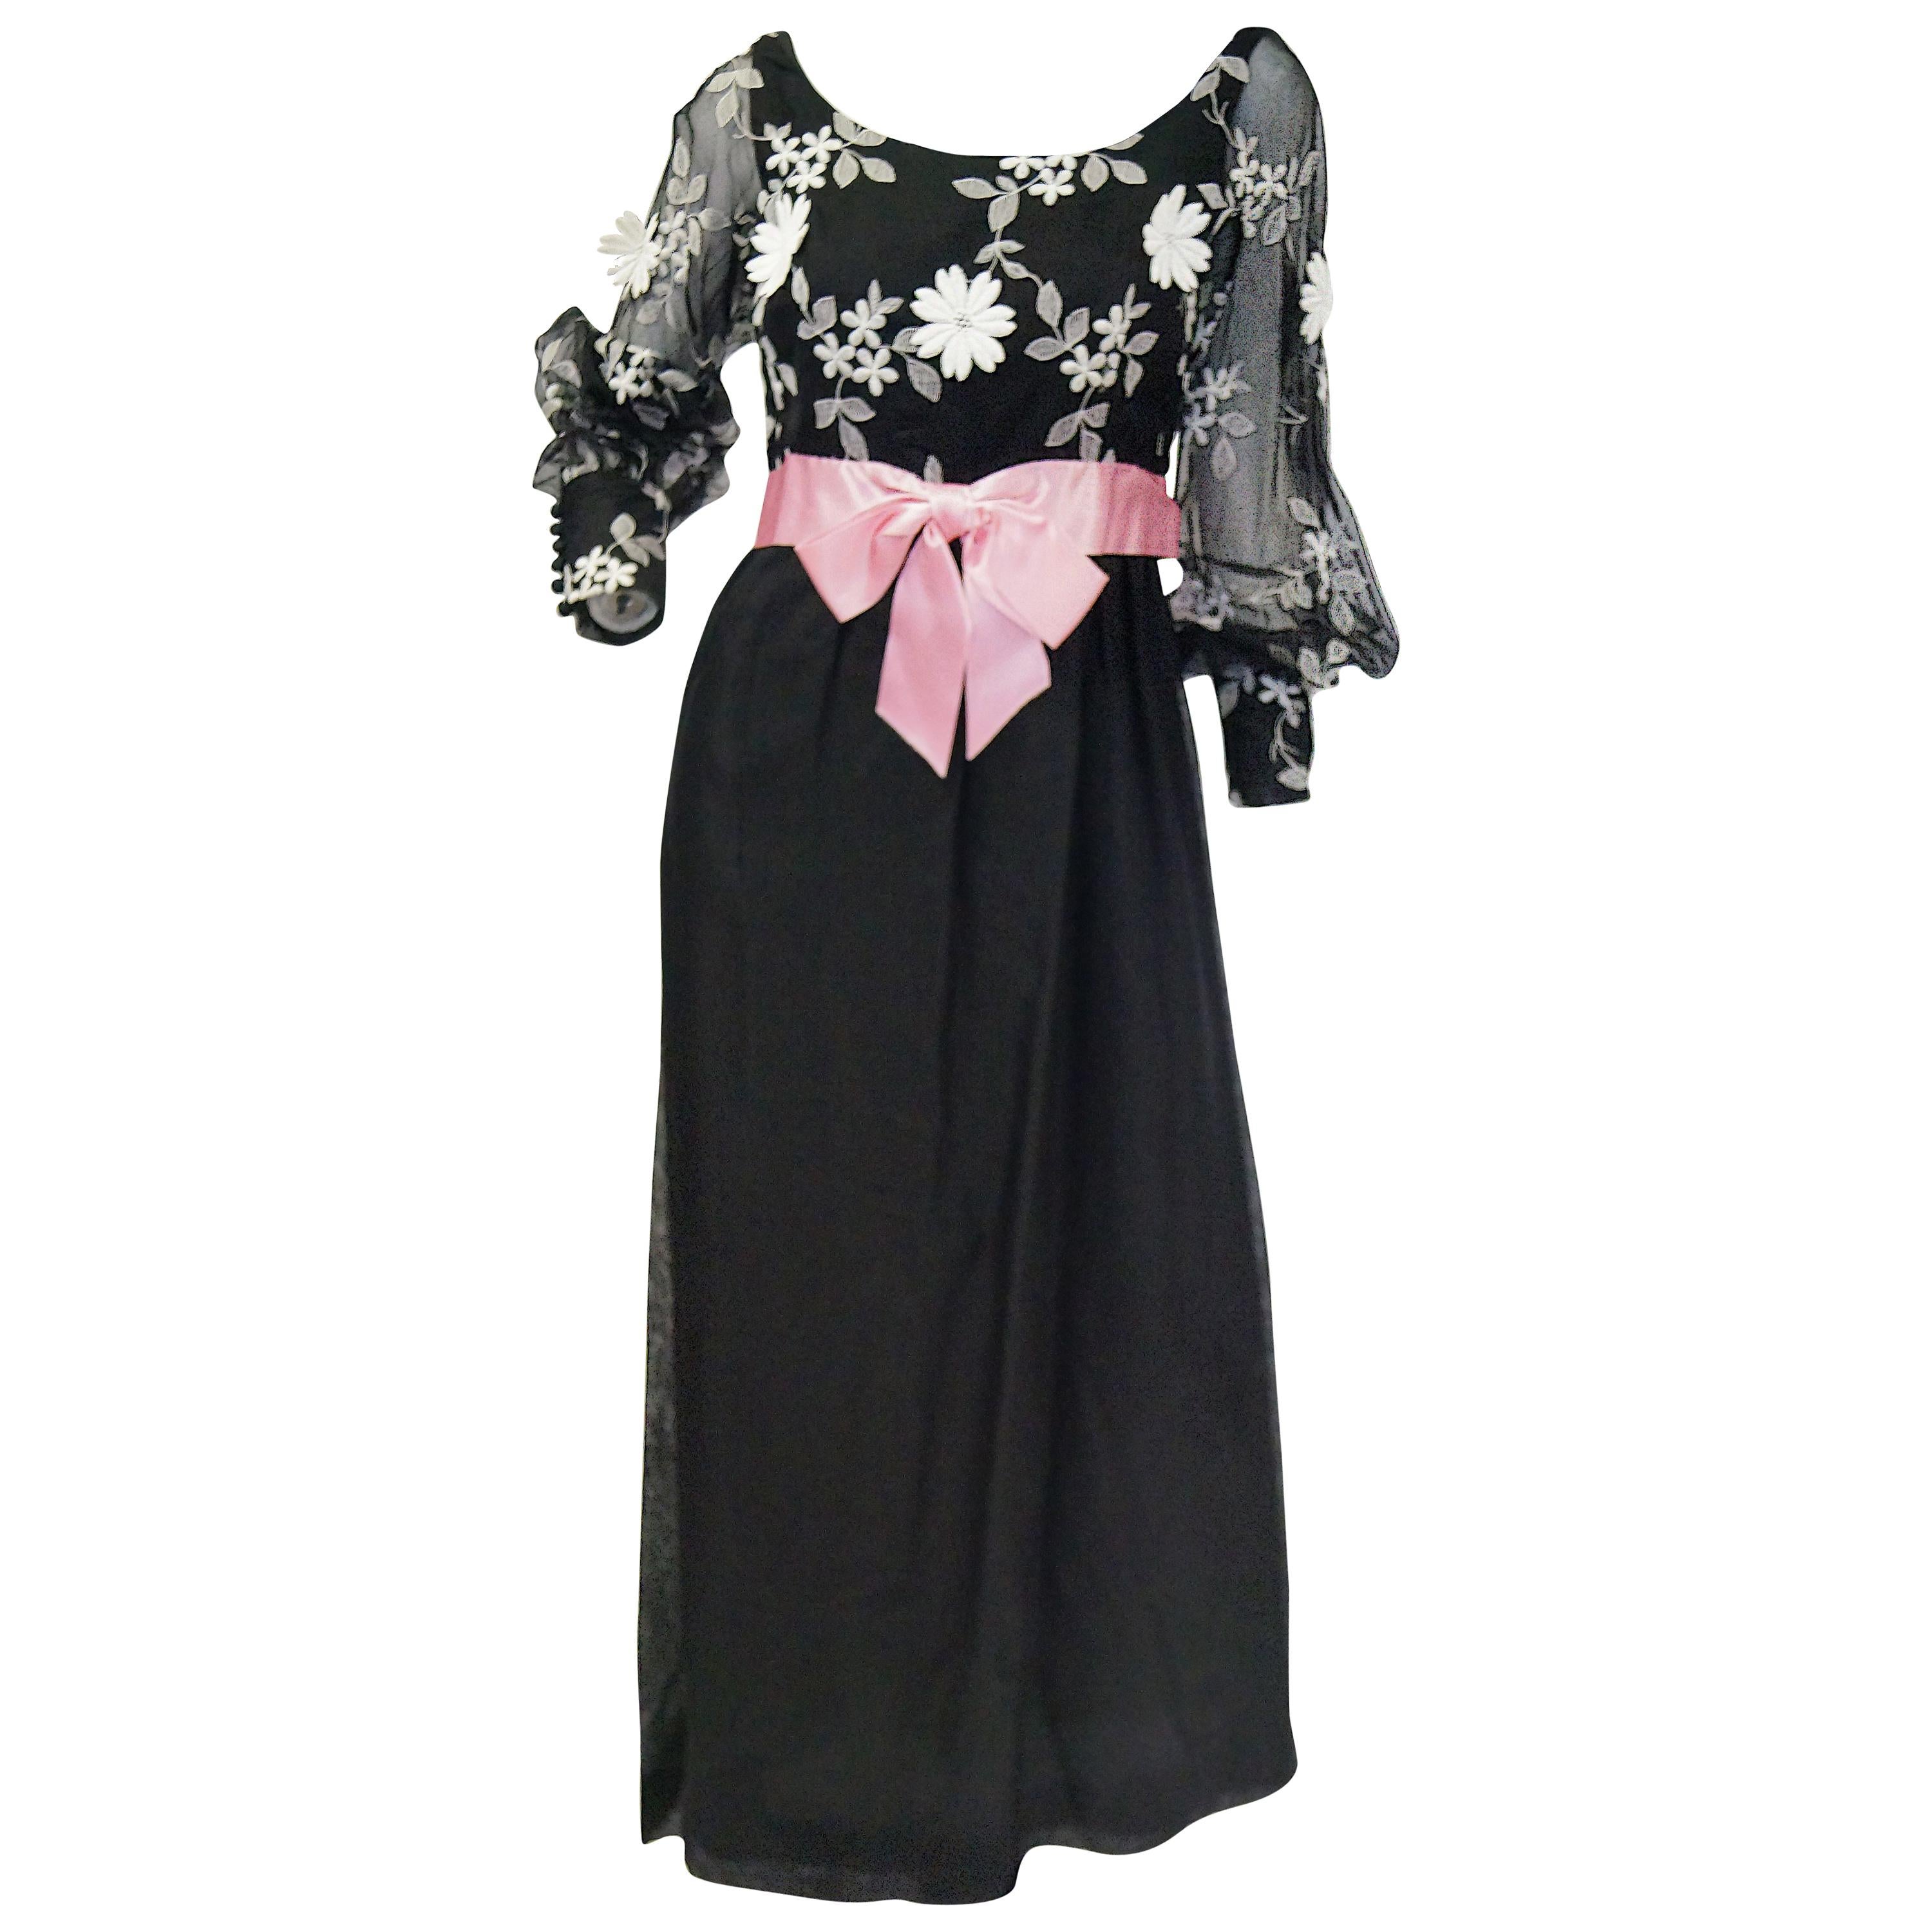 1960s Geoffrey Beene Black Evening Dress w/ White Floral Details & Pink Ribbon For Sale